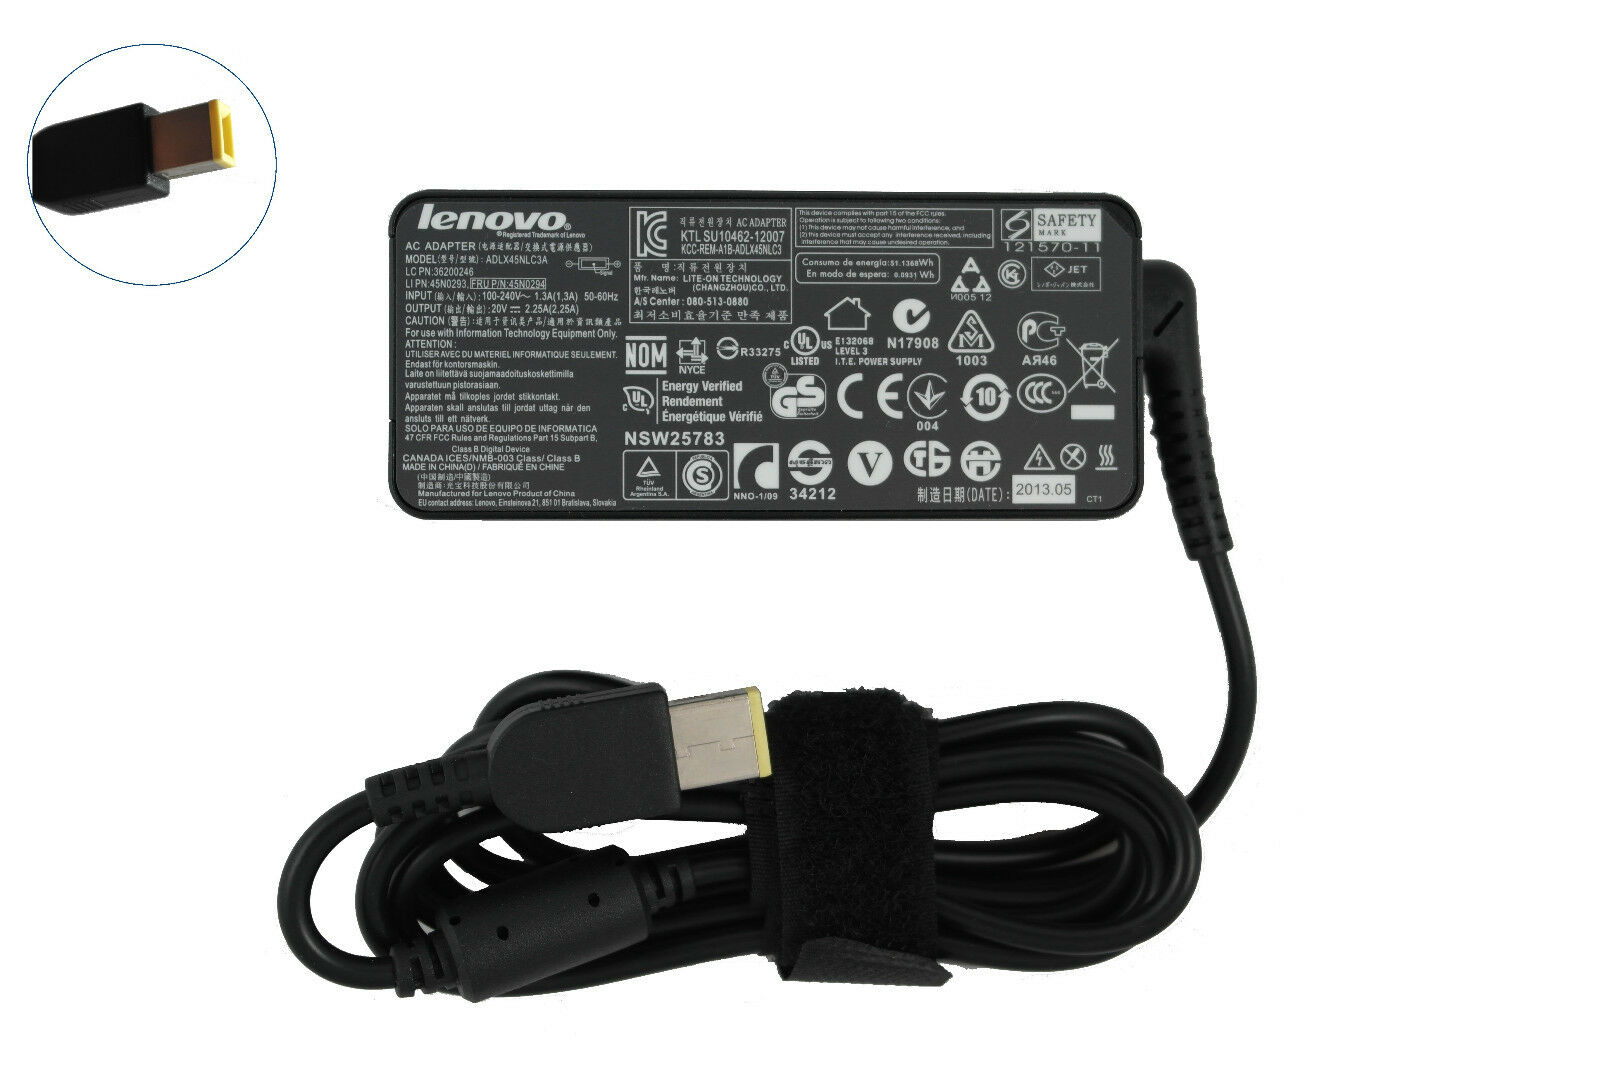 ADLX45NLC3,36200246,45N0293,45N0294 Lenovo 20V 2.25A 45W AC Charger F IdeaPad Yoga 11 Convertible Ultrabook MPN: 0C19